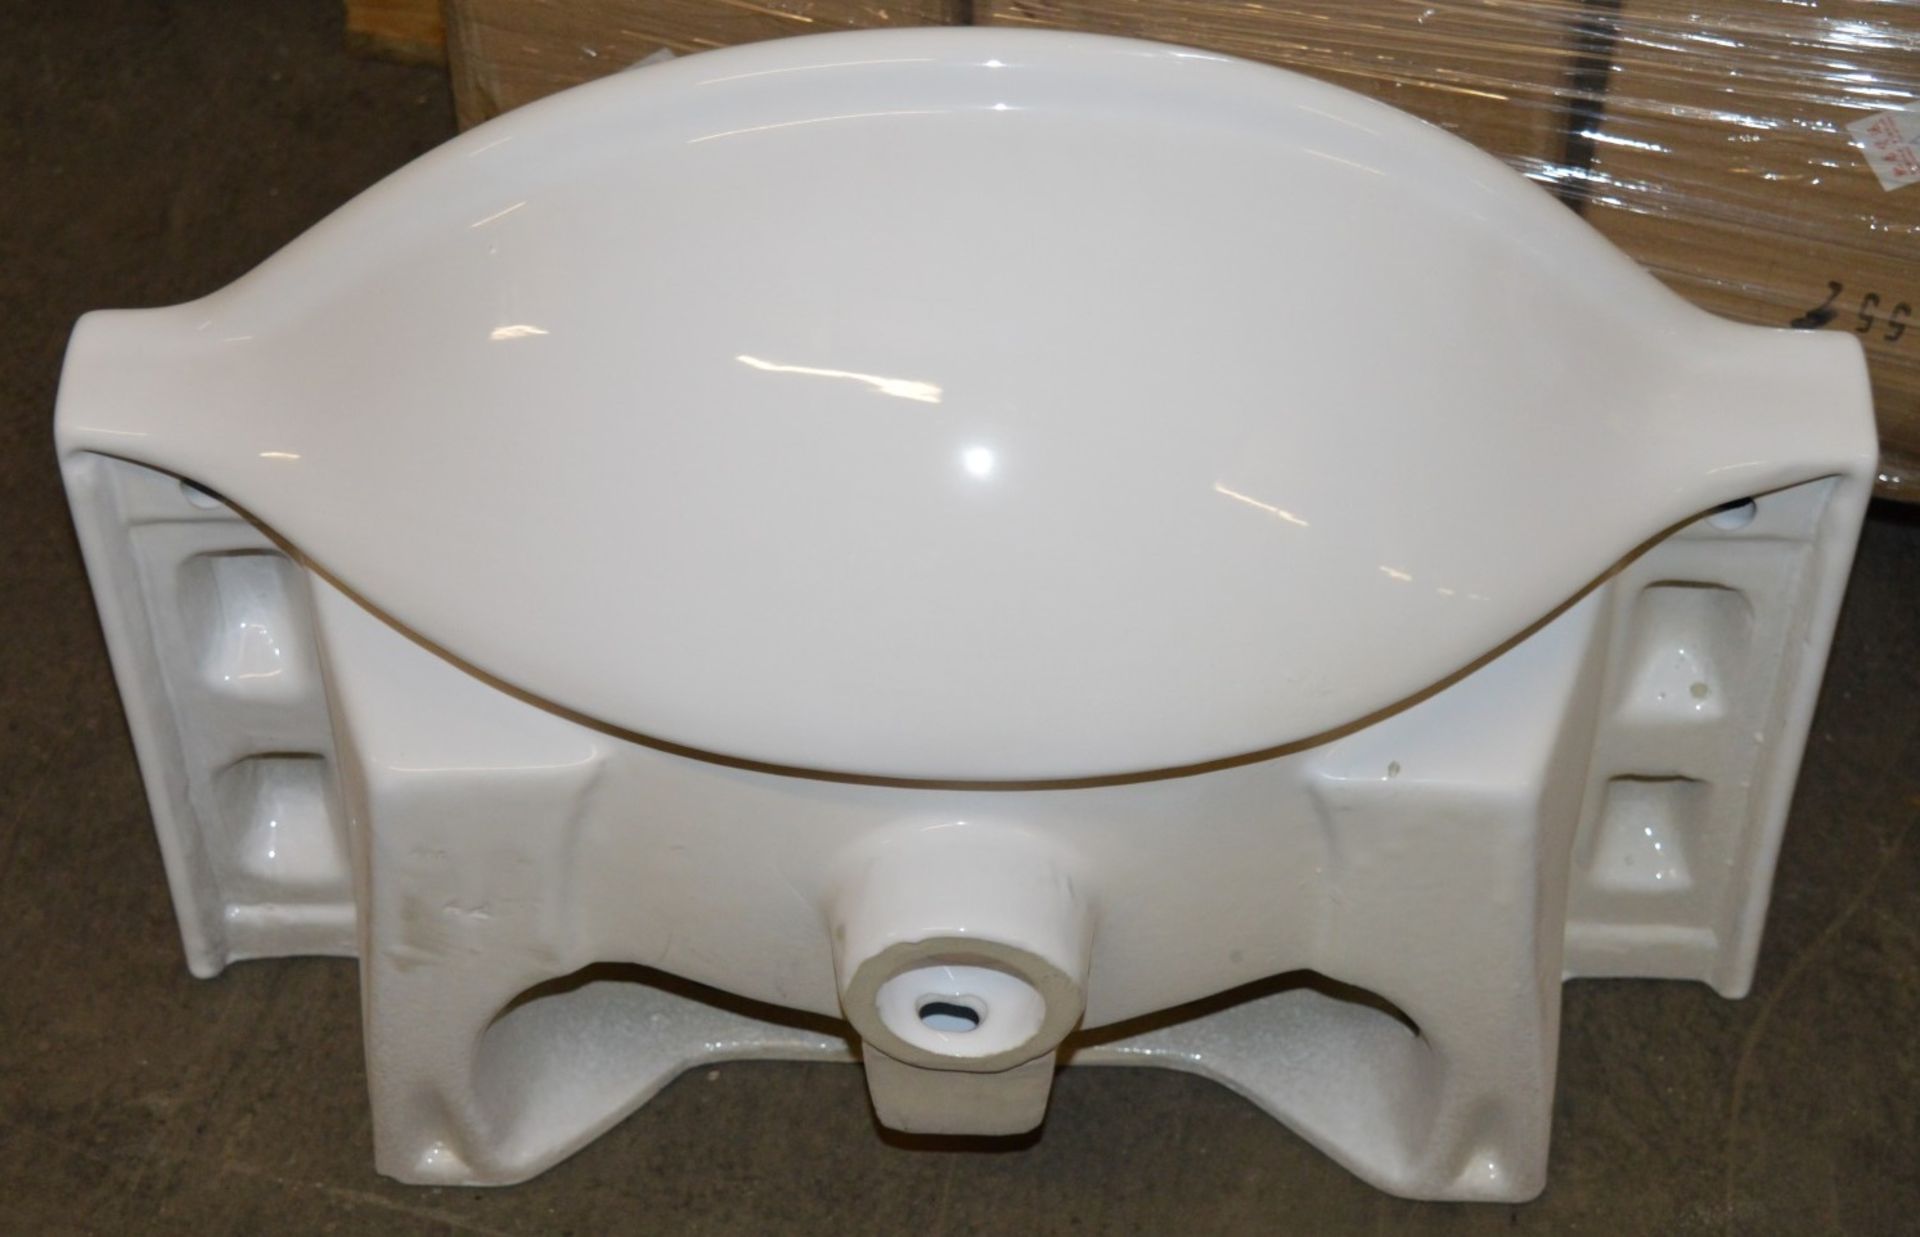 1 x Vogue Bathrooms LUNA Semi Recessed Bathroom Sink Basin - High Quality Ceramic Sink Basin - CL034 - Image 2 of 2